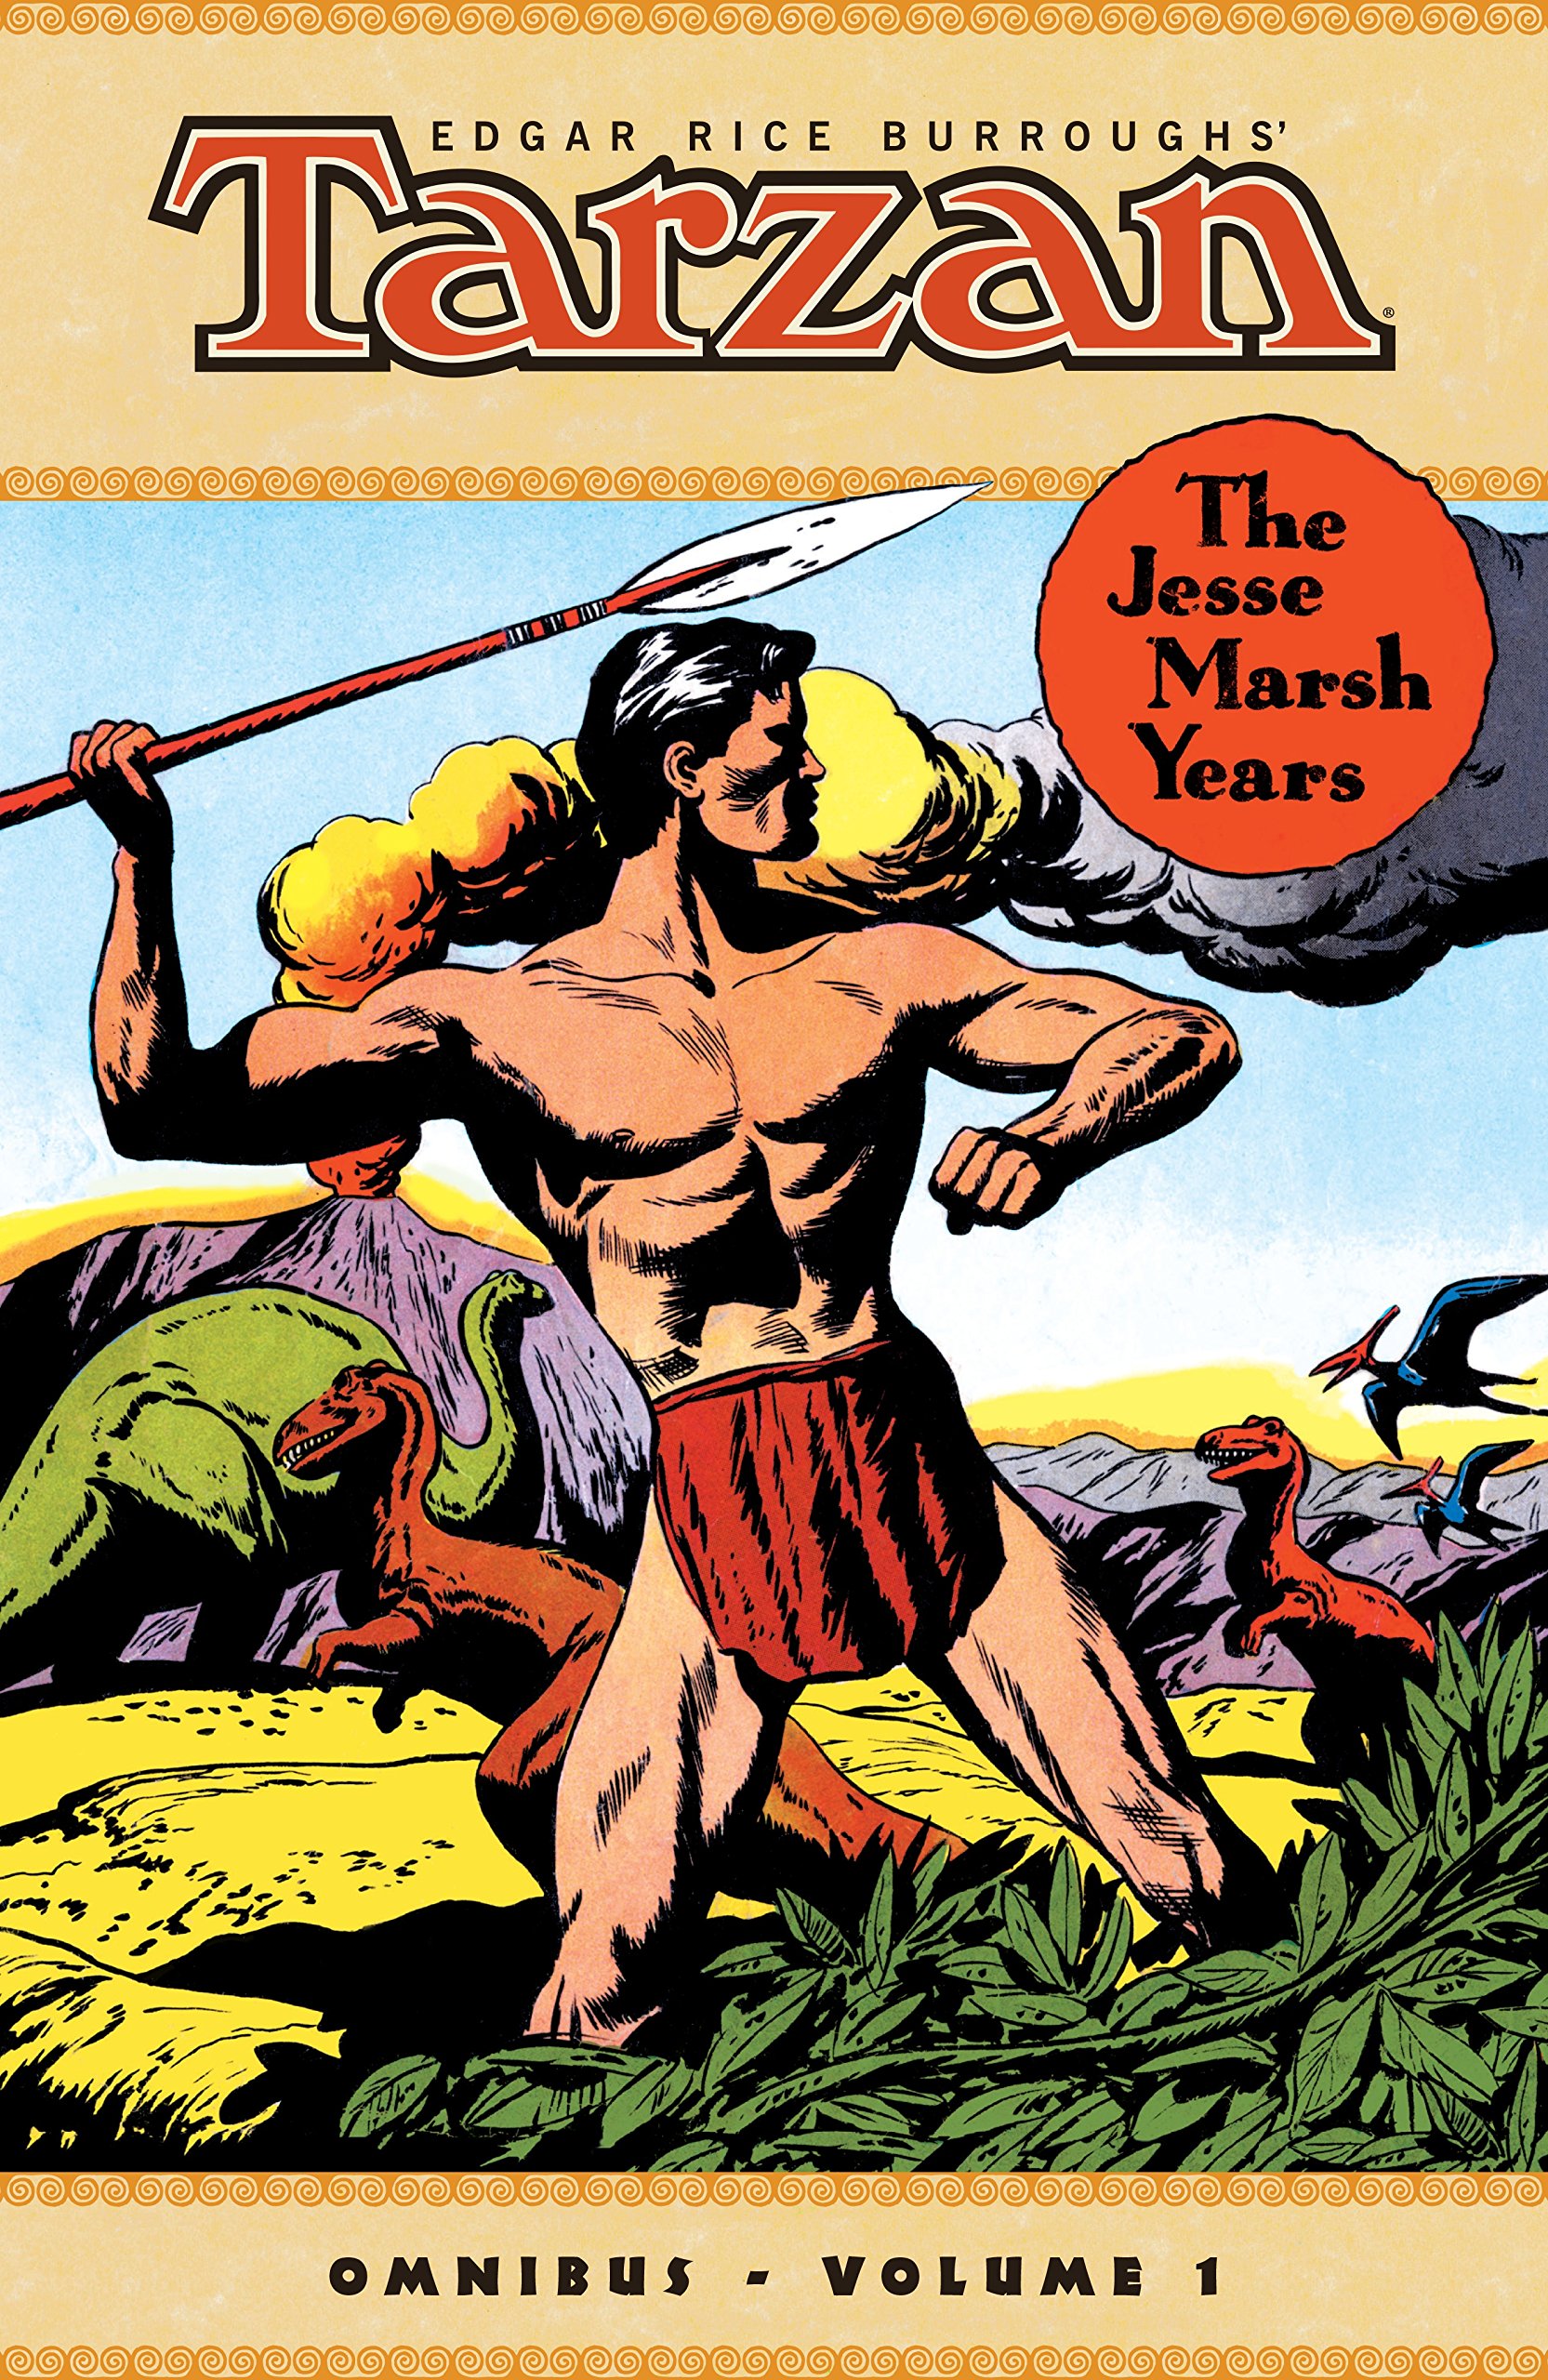 Edgar Rice Burroughs' Tarzan: The Jesse Marsh Years Omnibus Volume 1 (Edgar Rice Burroughs Tarzan: The Jesse Marsh Years)